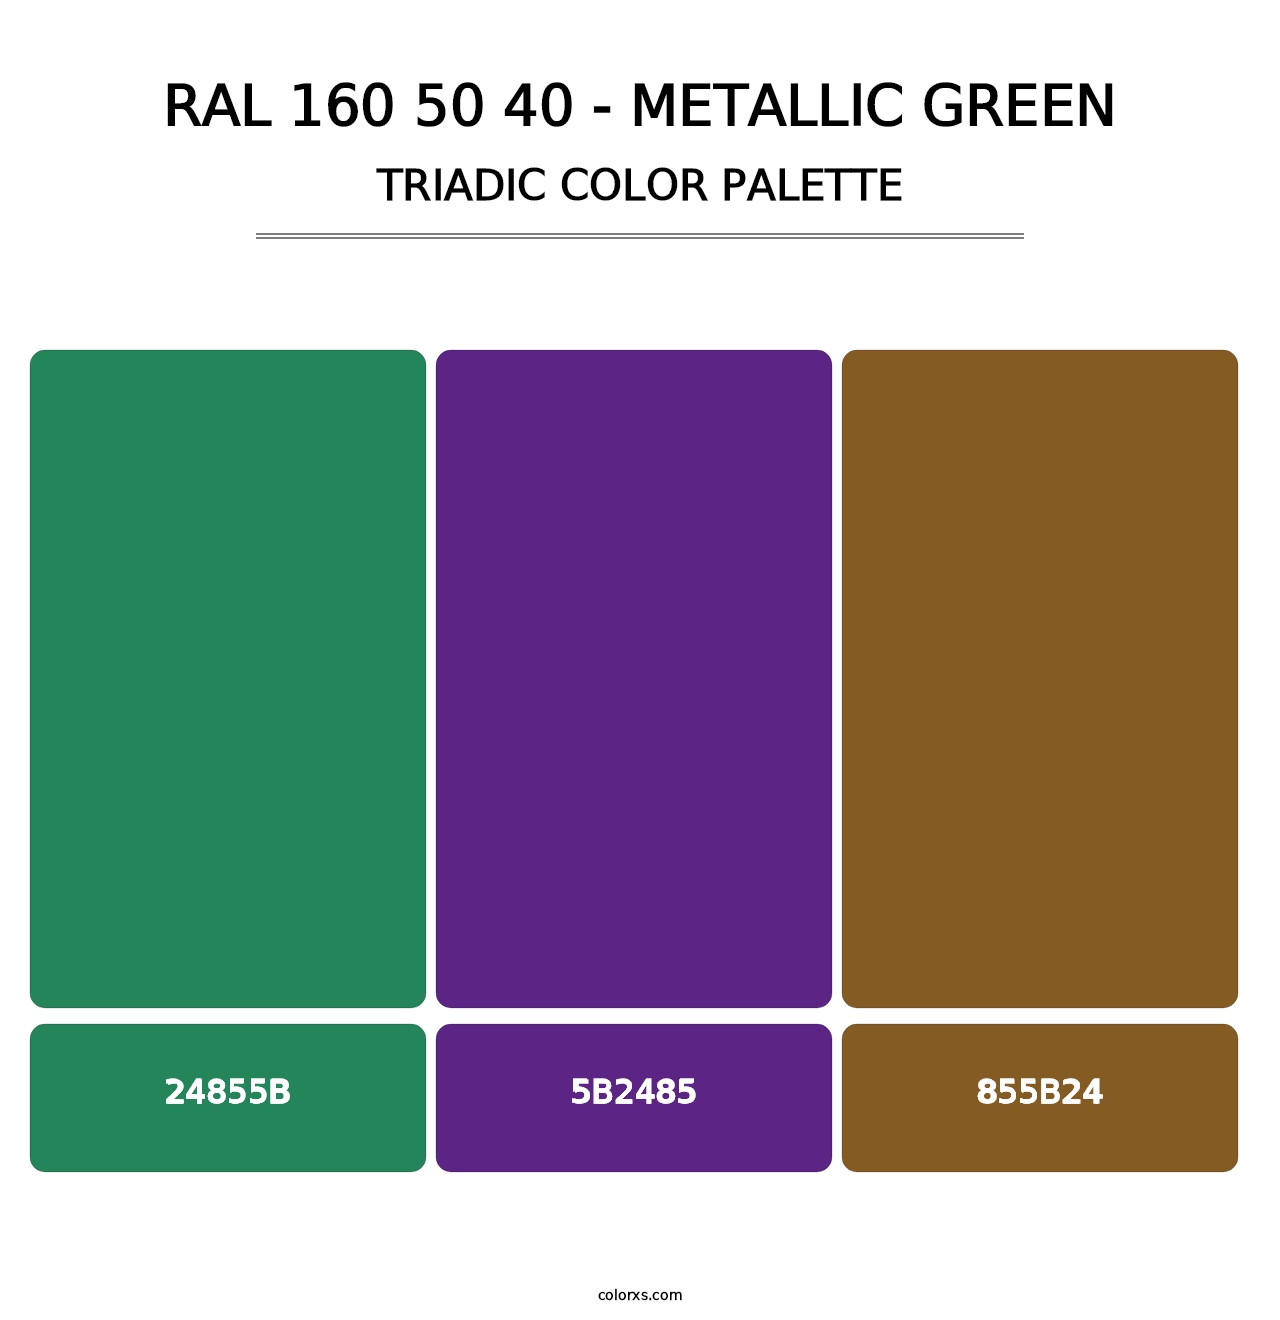 RAL 160 50 40 - Metallic Green - Triadic Color Palette